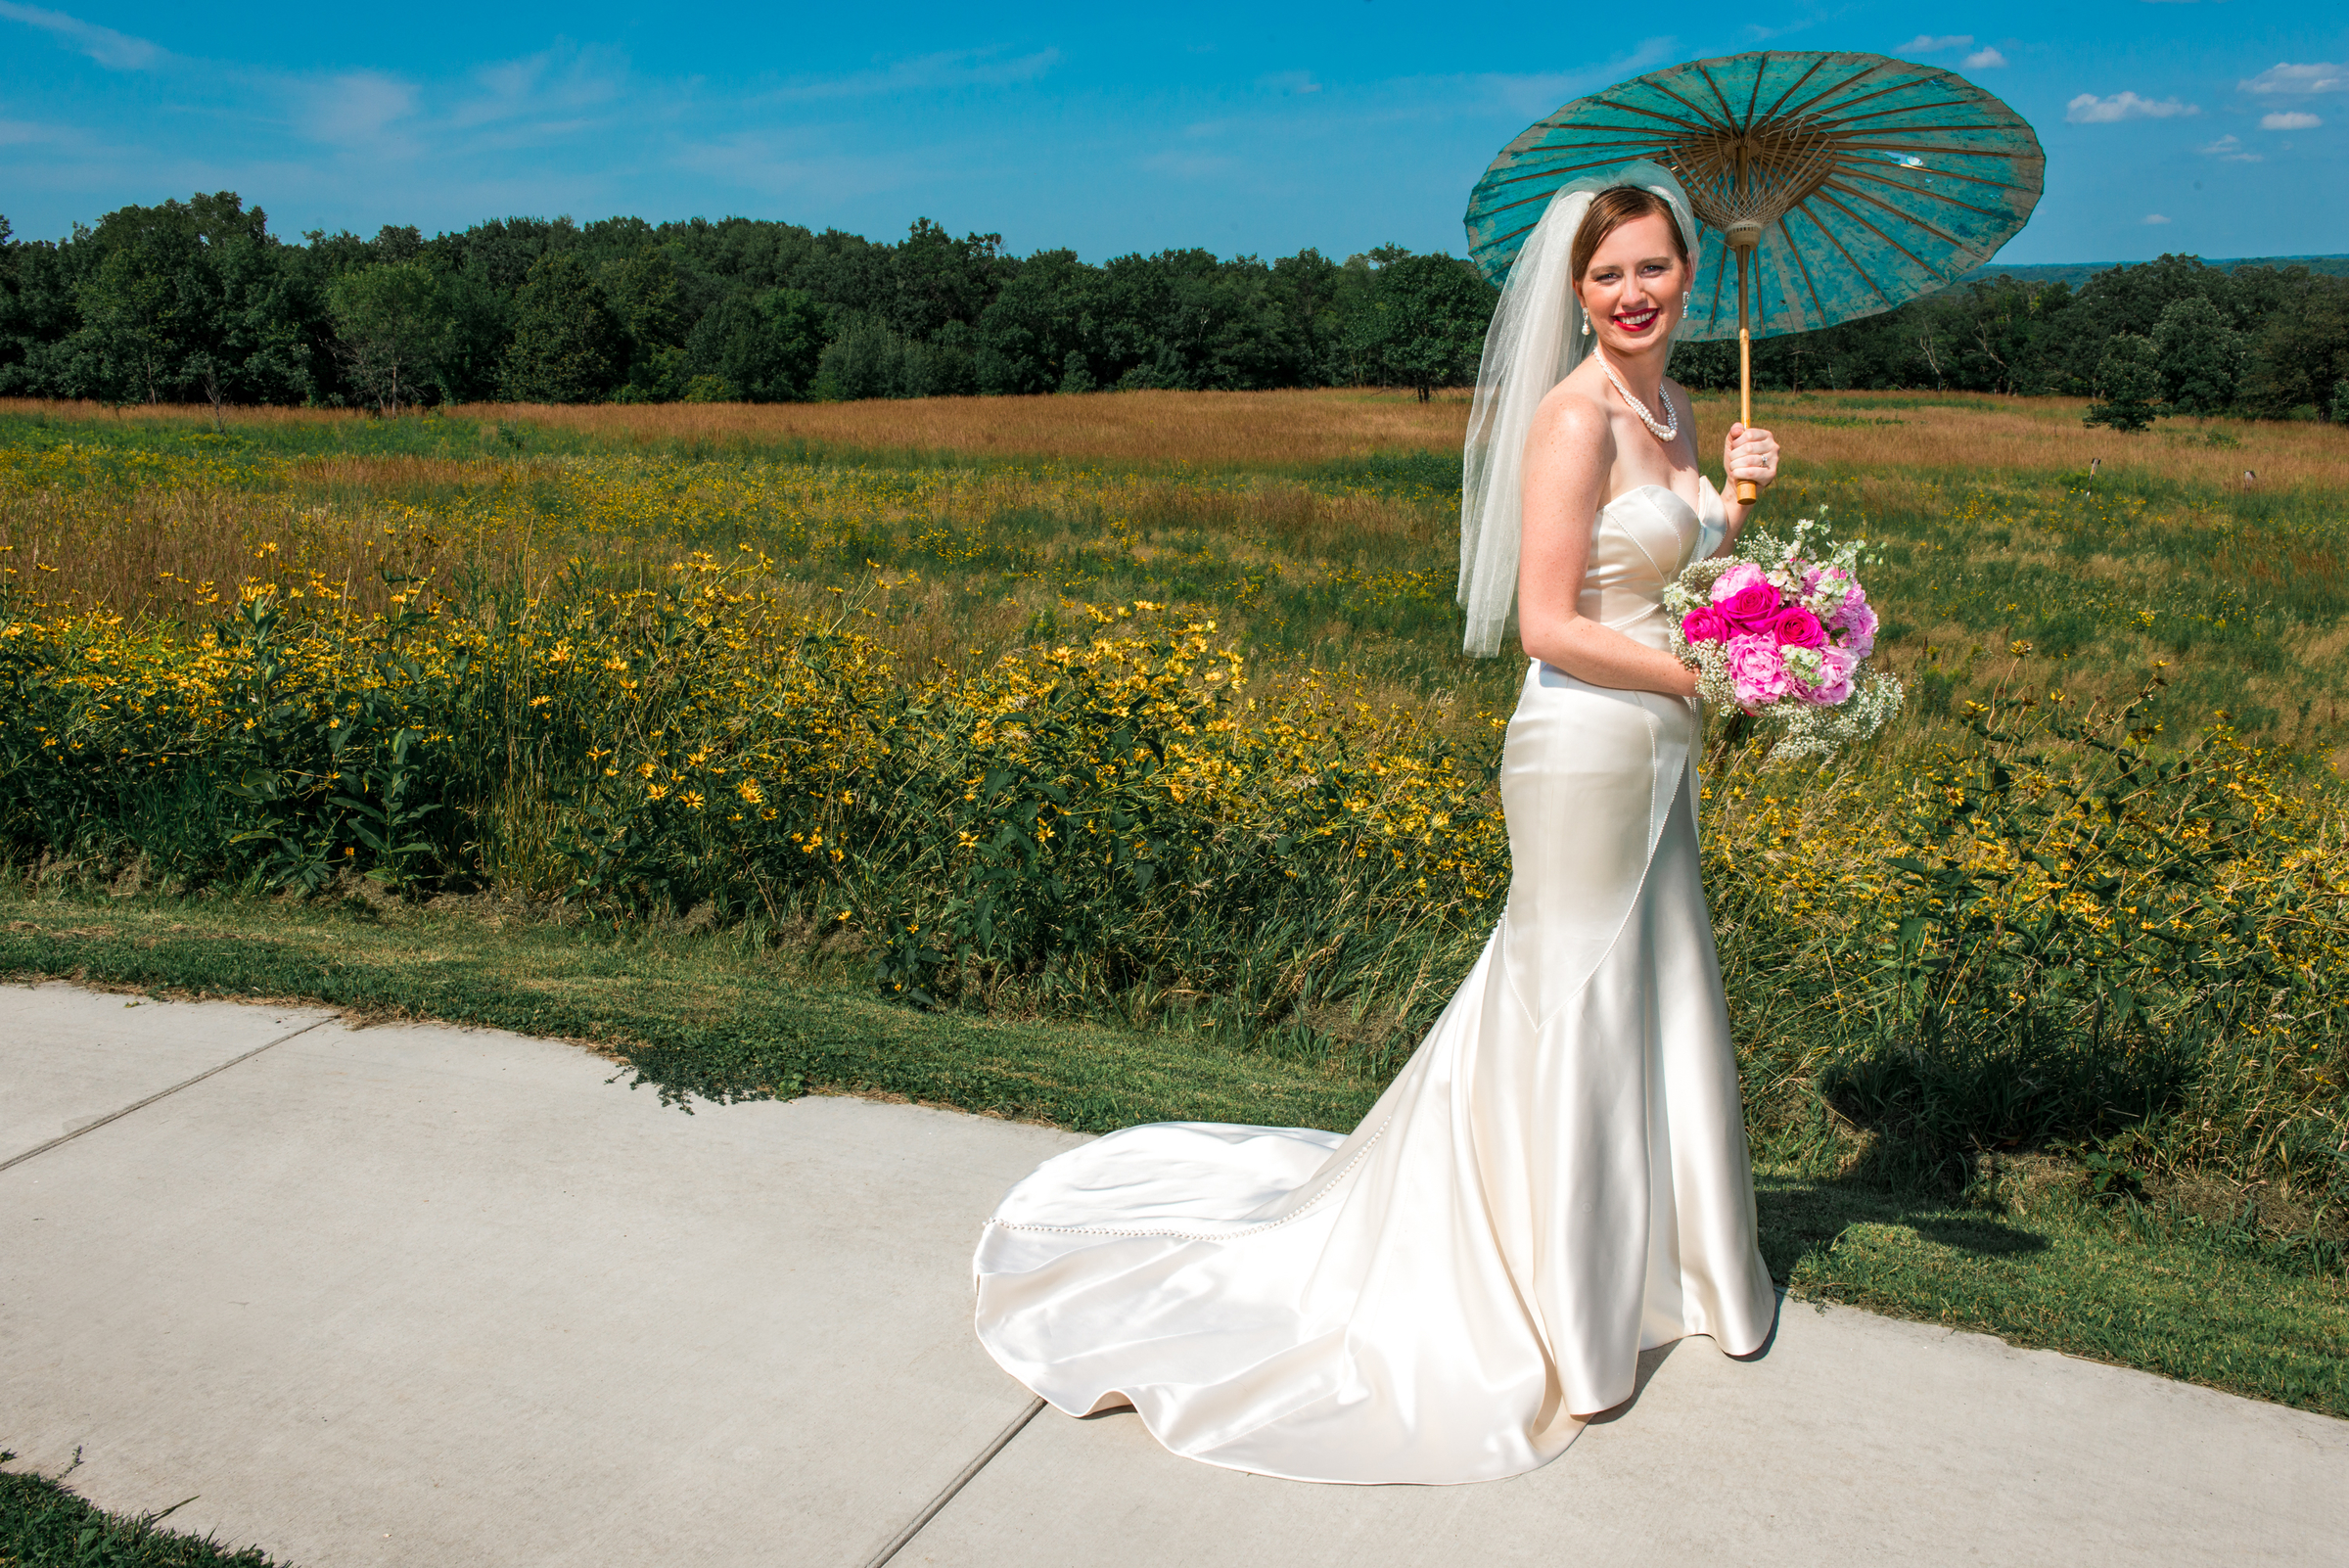 Bride holds parasol at Carpenter Nature Center wedding in Hastings, Minnesota.